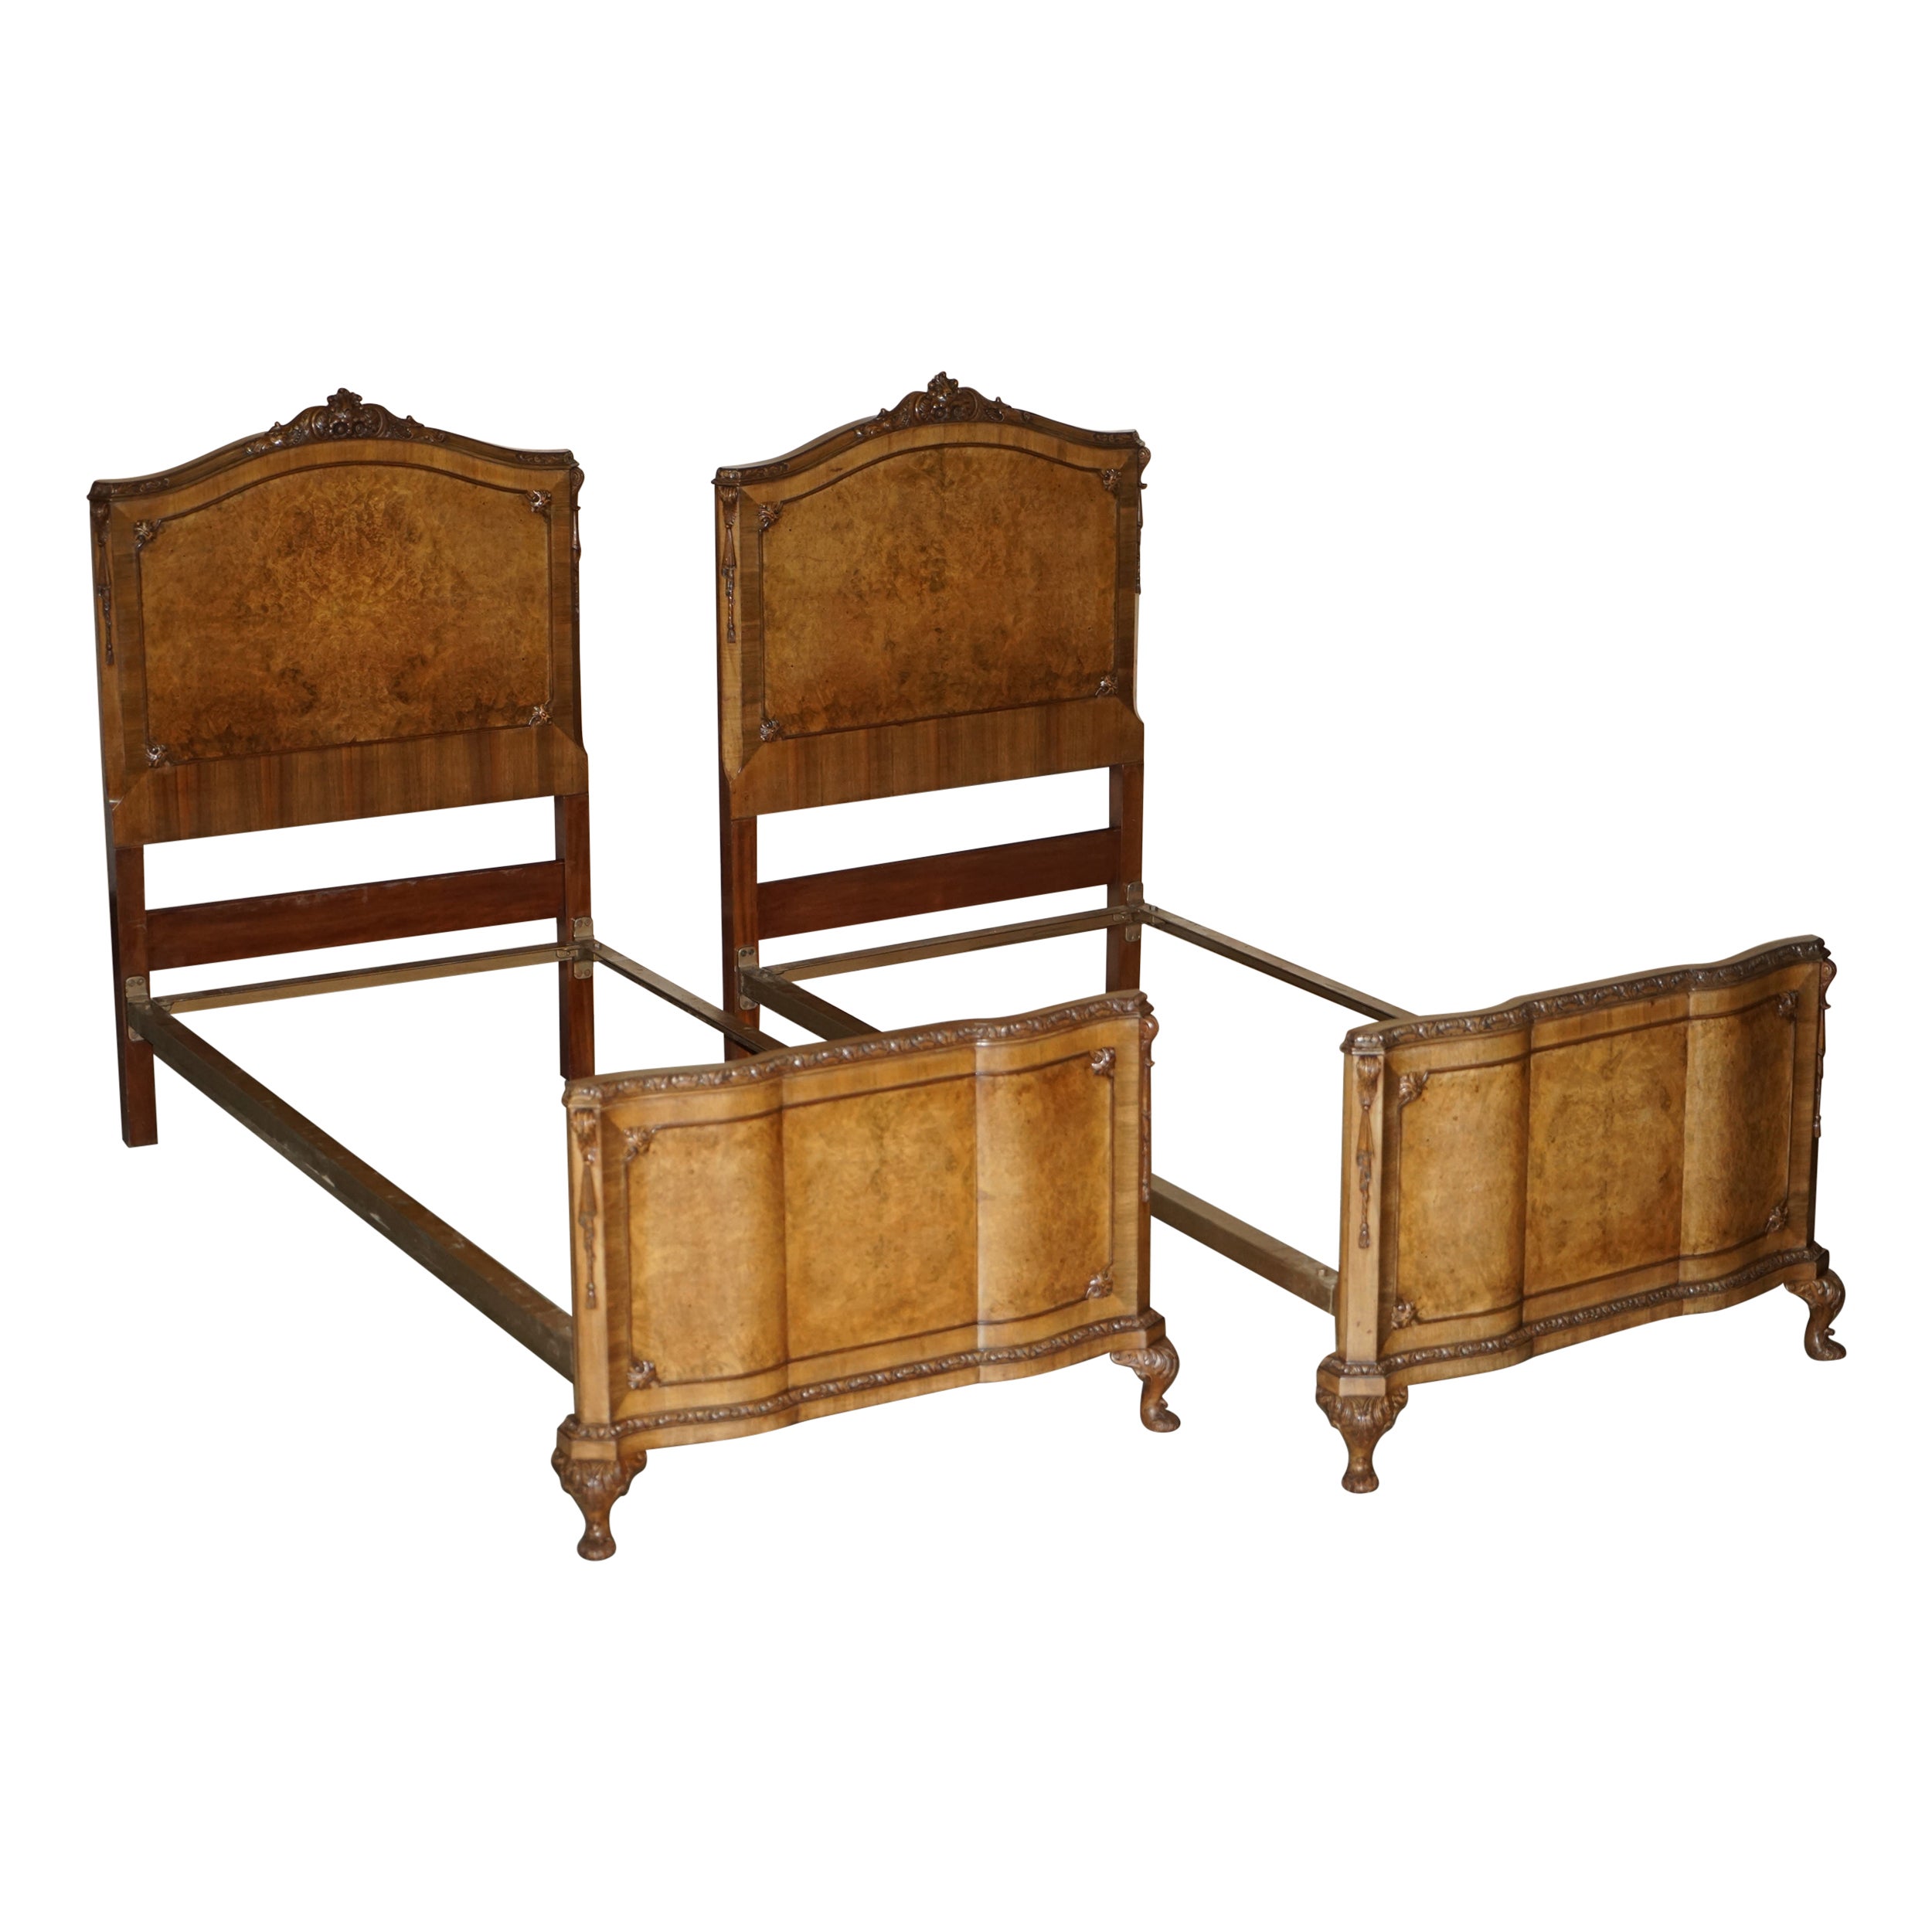 Pair of Antique Burr Walnut circa 1900 Single Bedsteads Bed Frames Part Suite